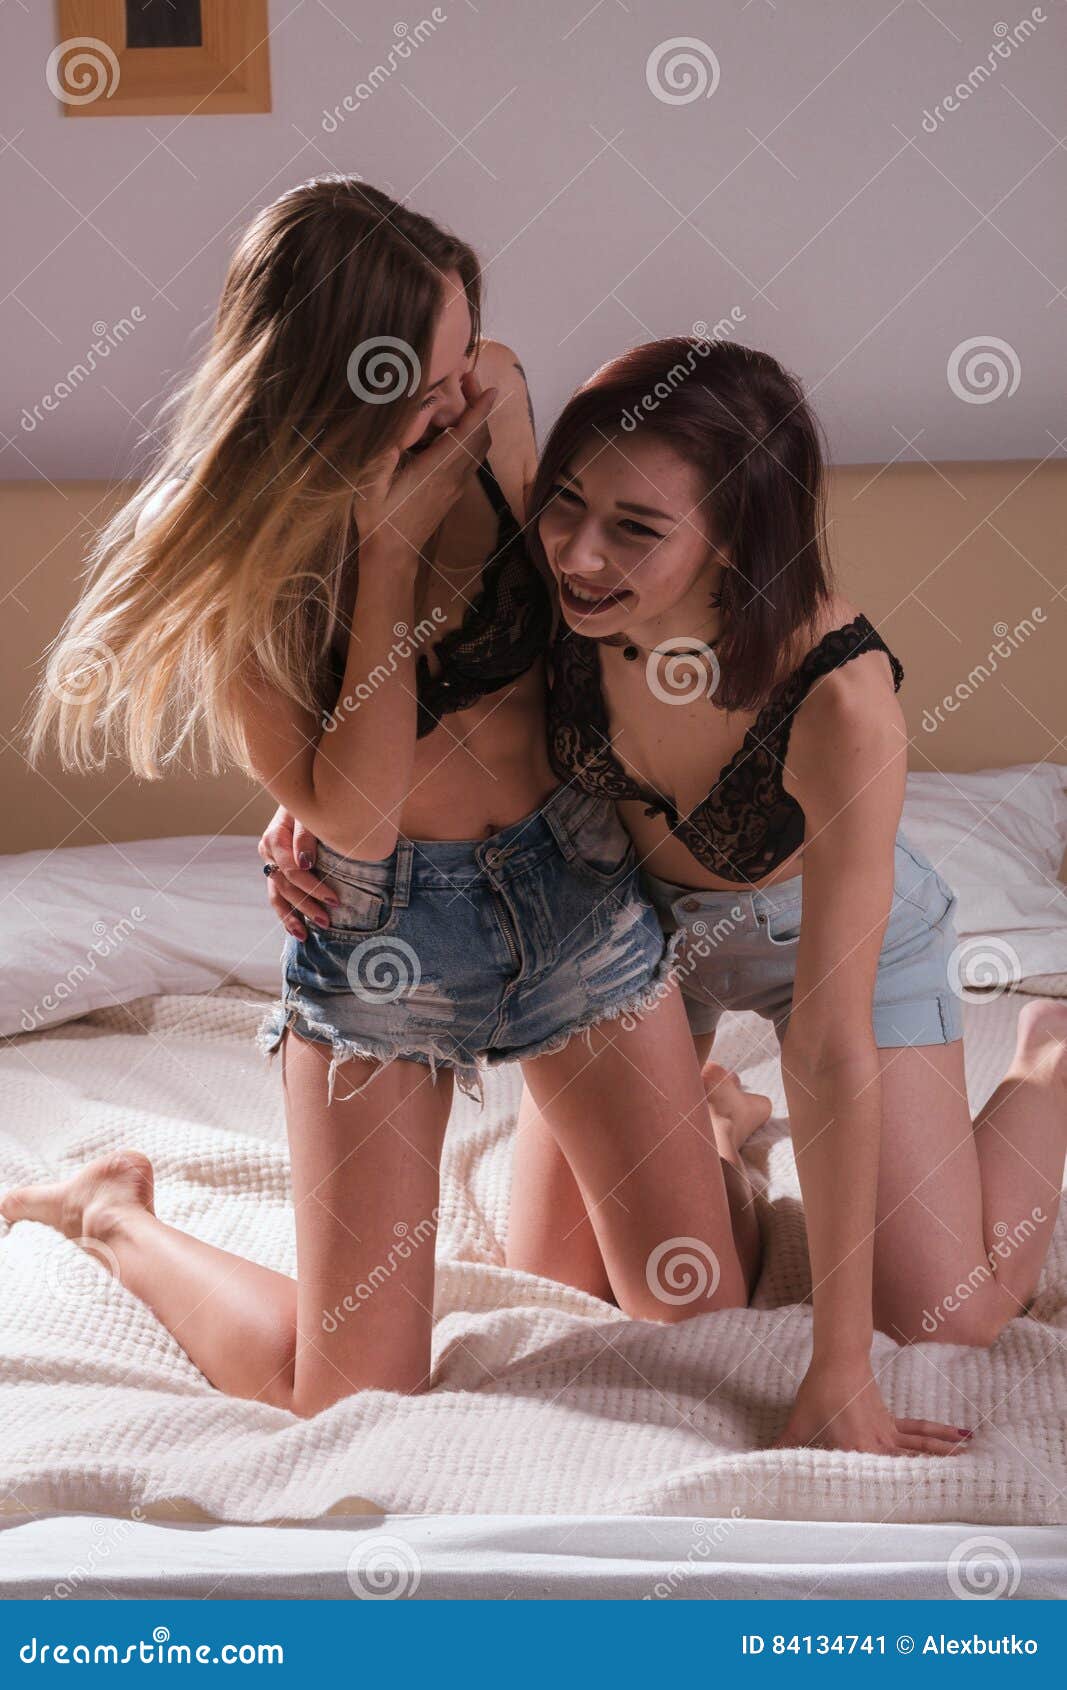 my two girlfriends having fun Porn Photos Hd